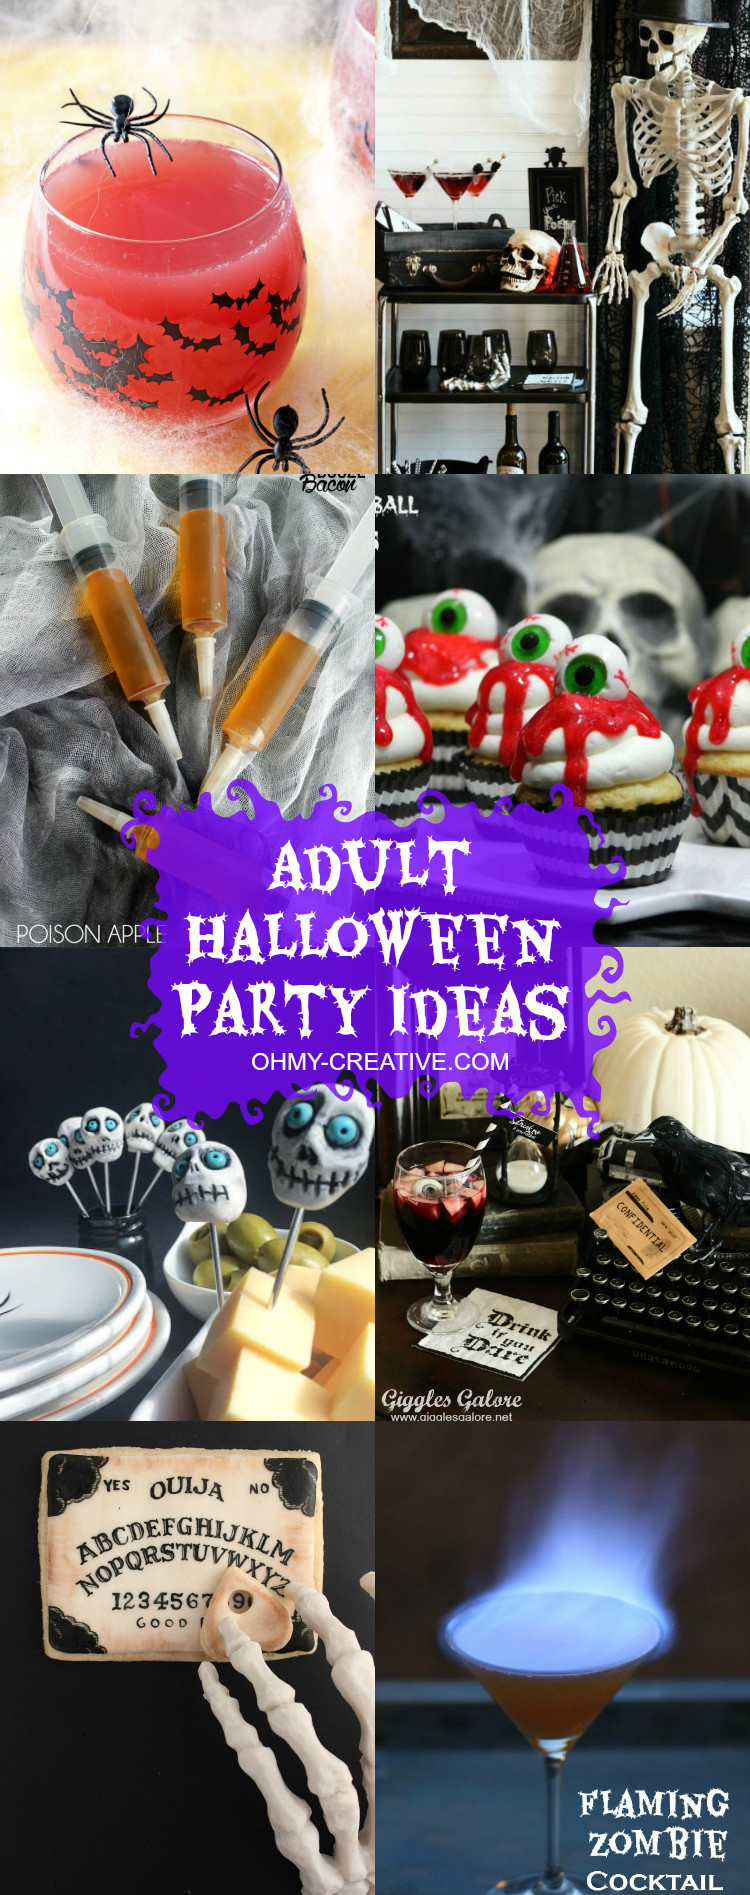 Halloween Adult Party Ideas
 Adult Halloween Party Ideas Oh My Creative